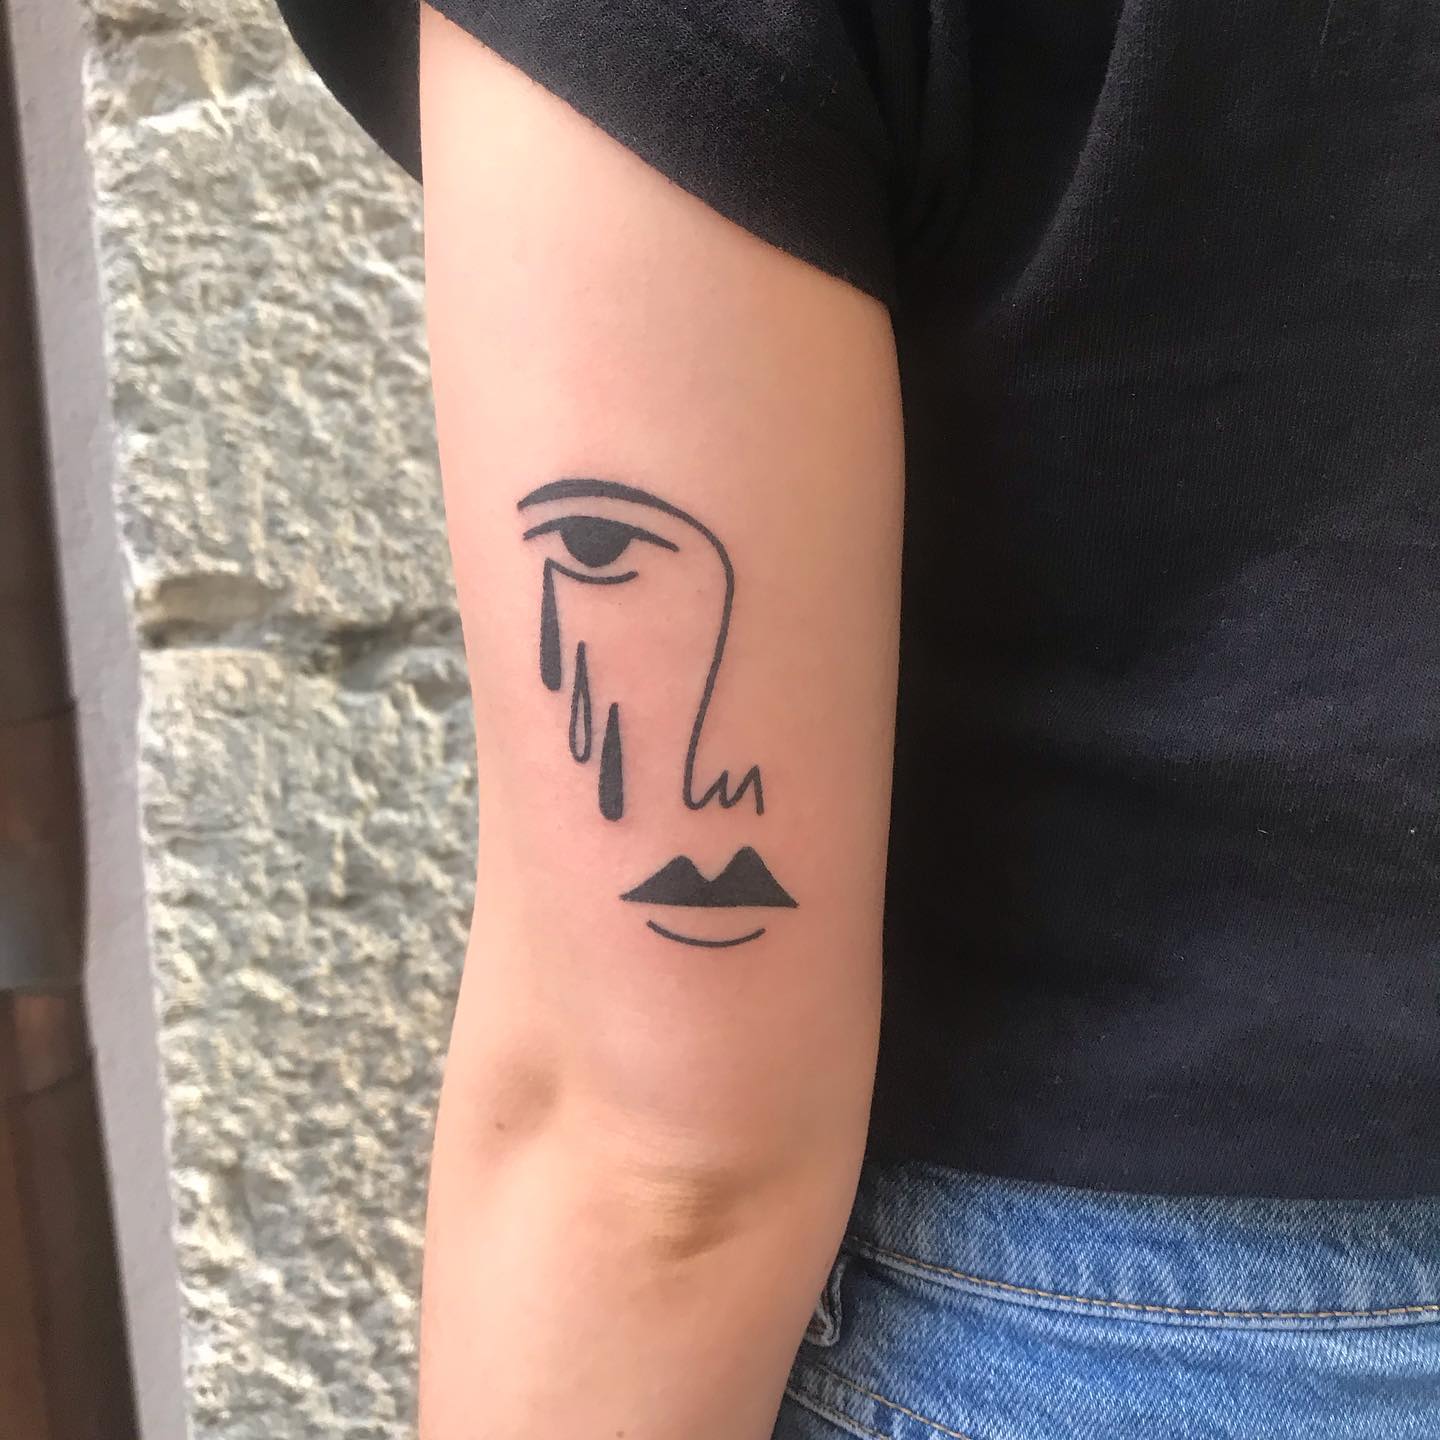 teardrop tattoo means Perseverance